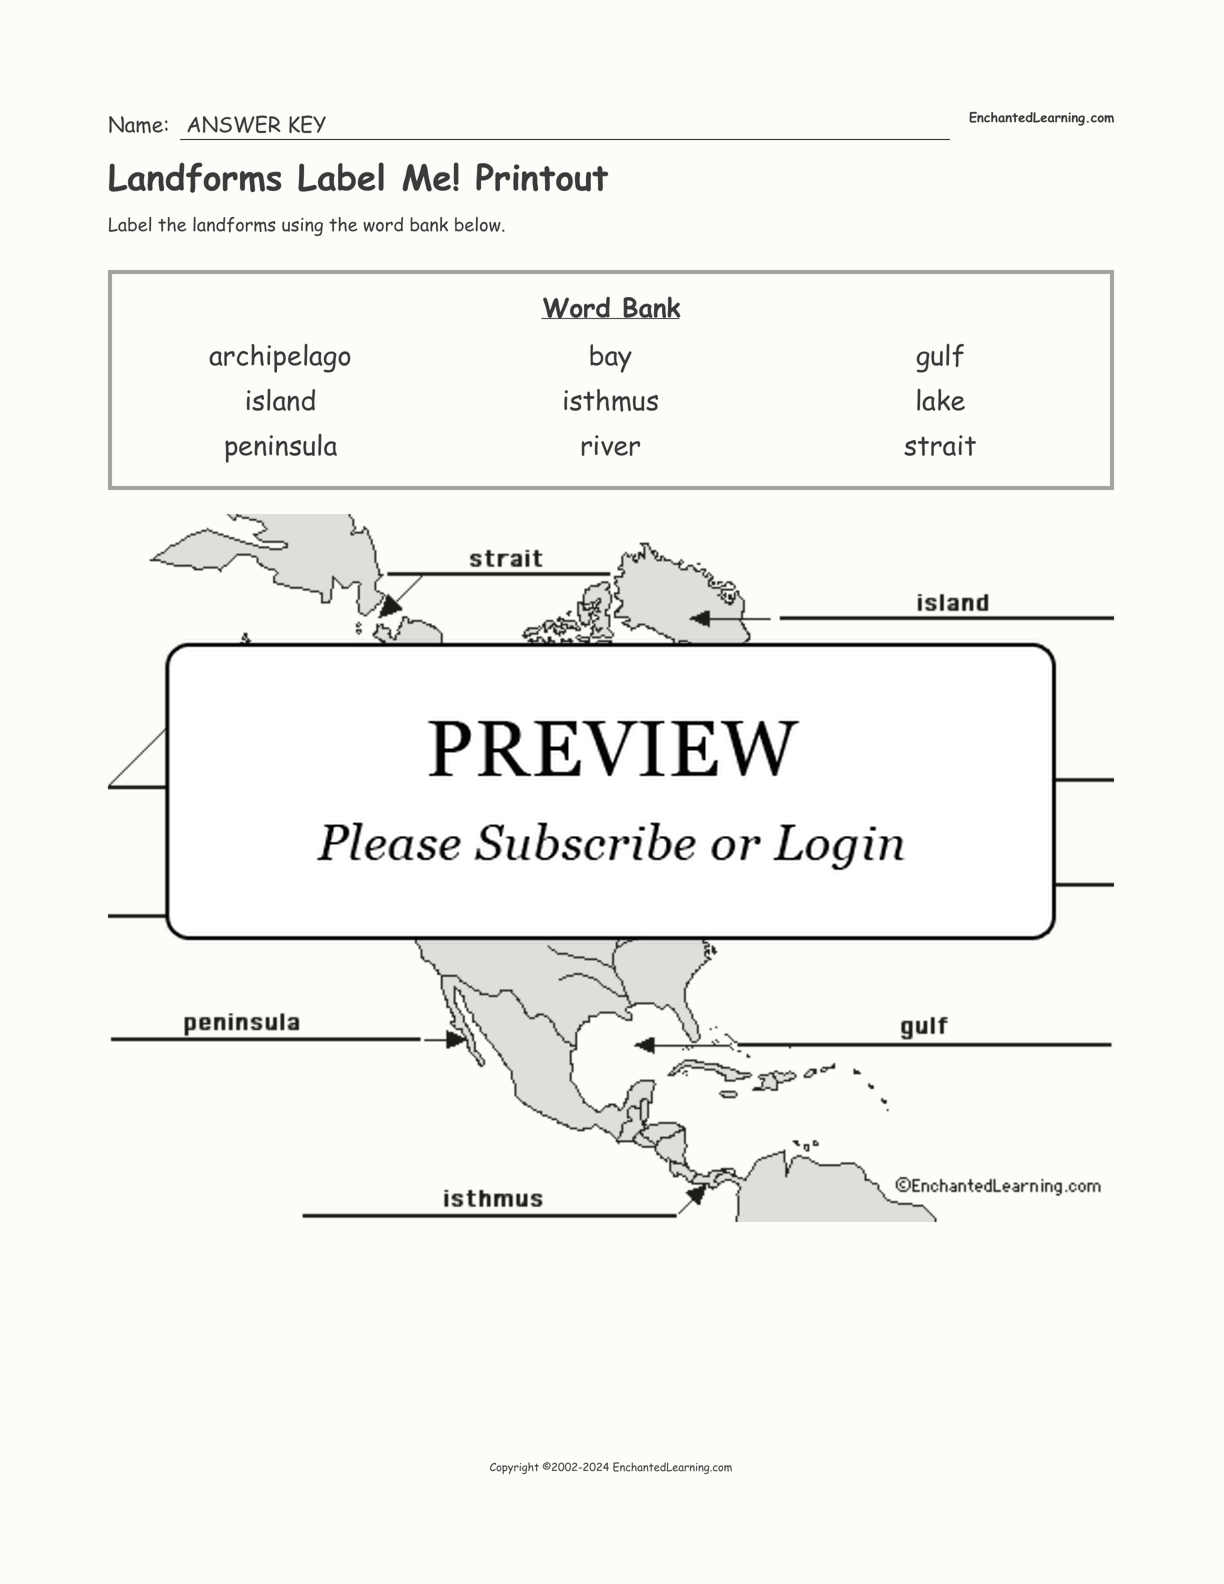 Landforms Label Me! Printout interactive worksheet page 2